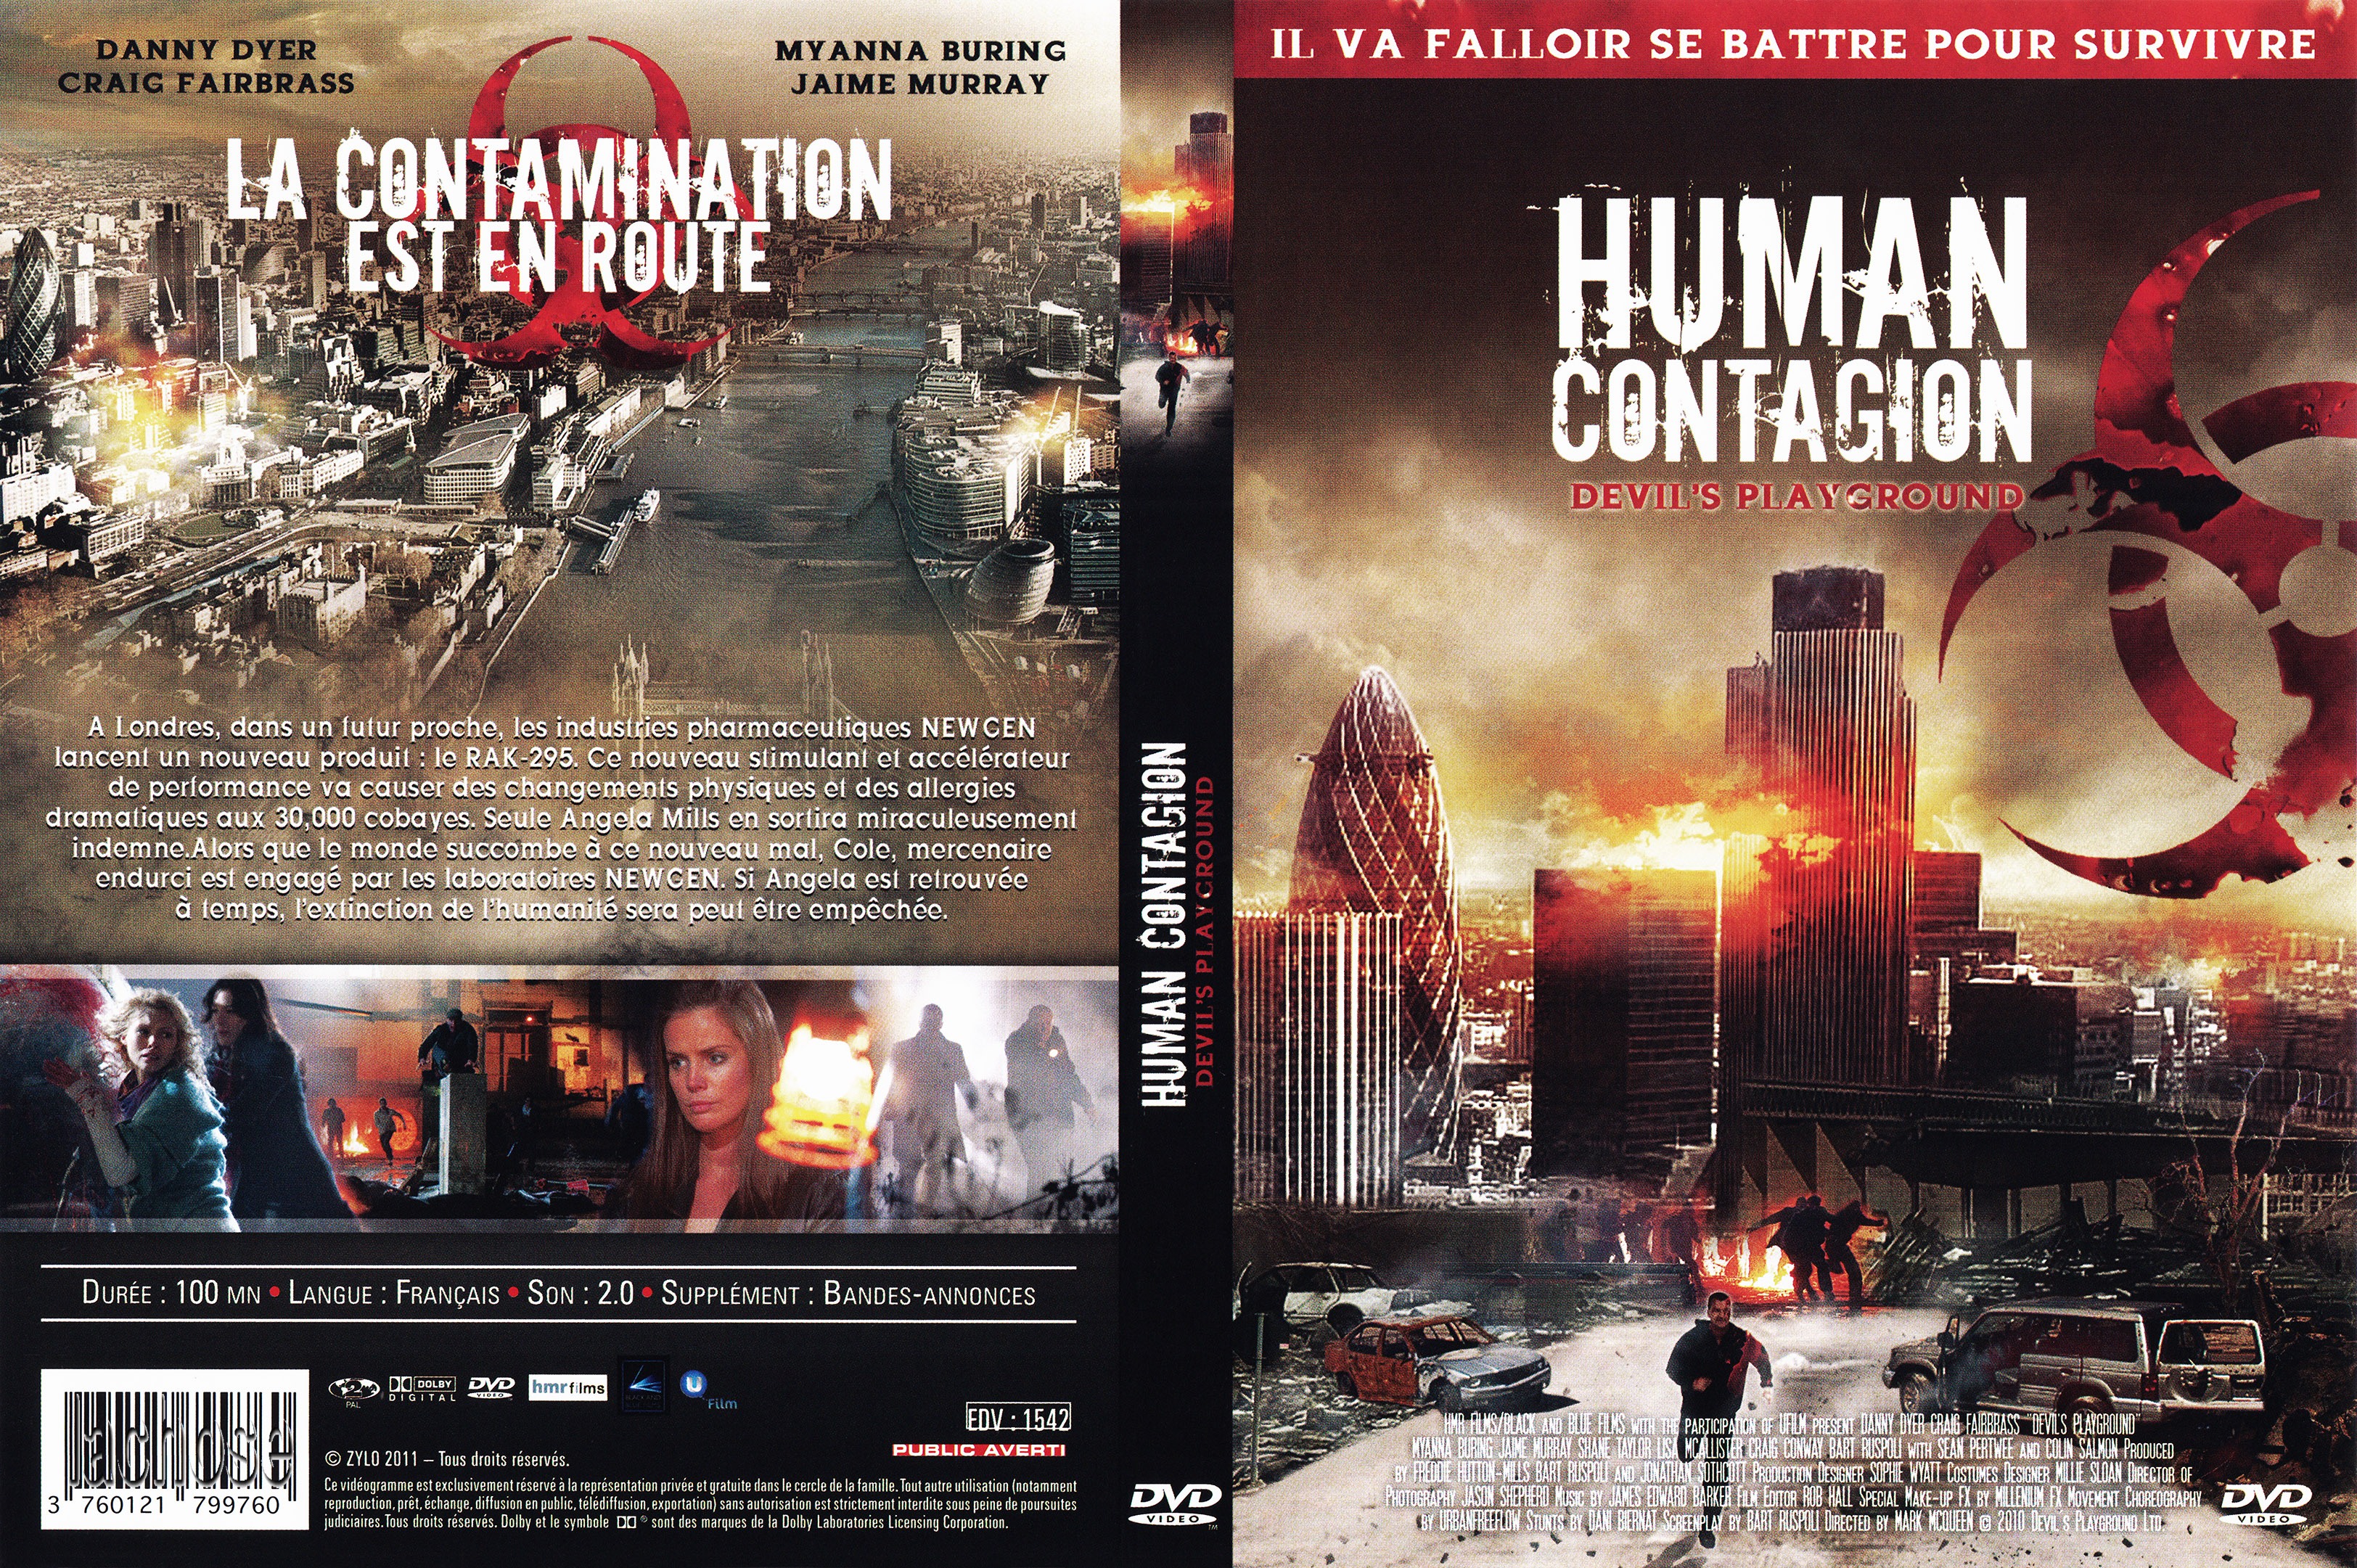 Jaquette DVD Human contagion